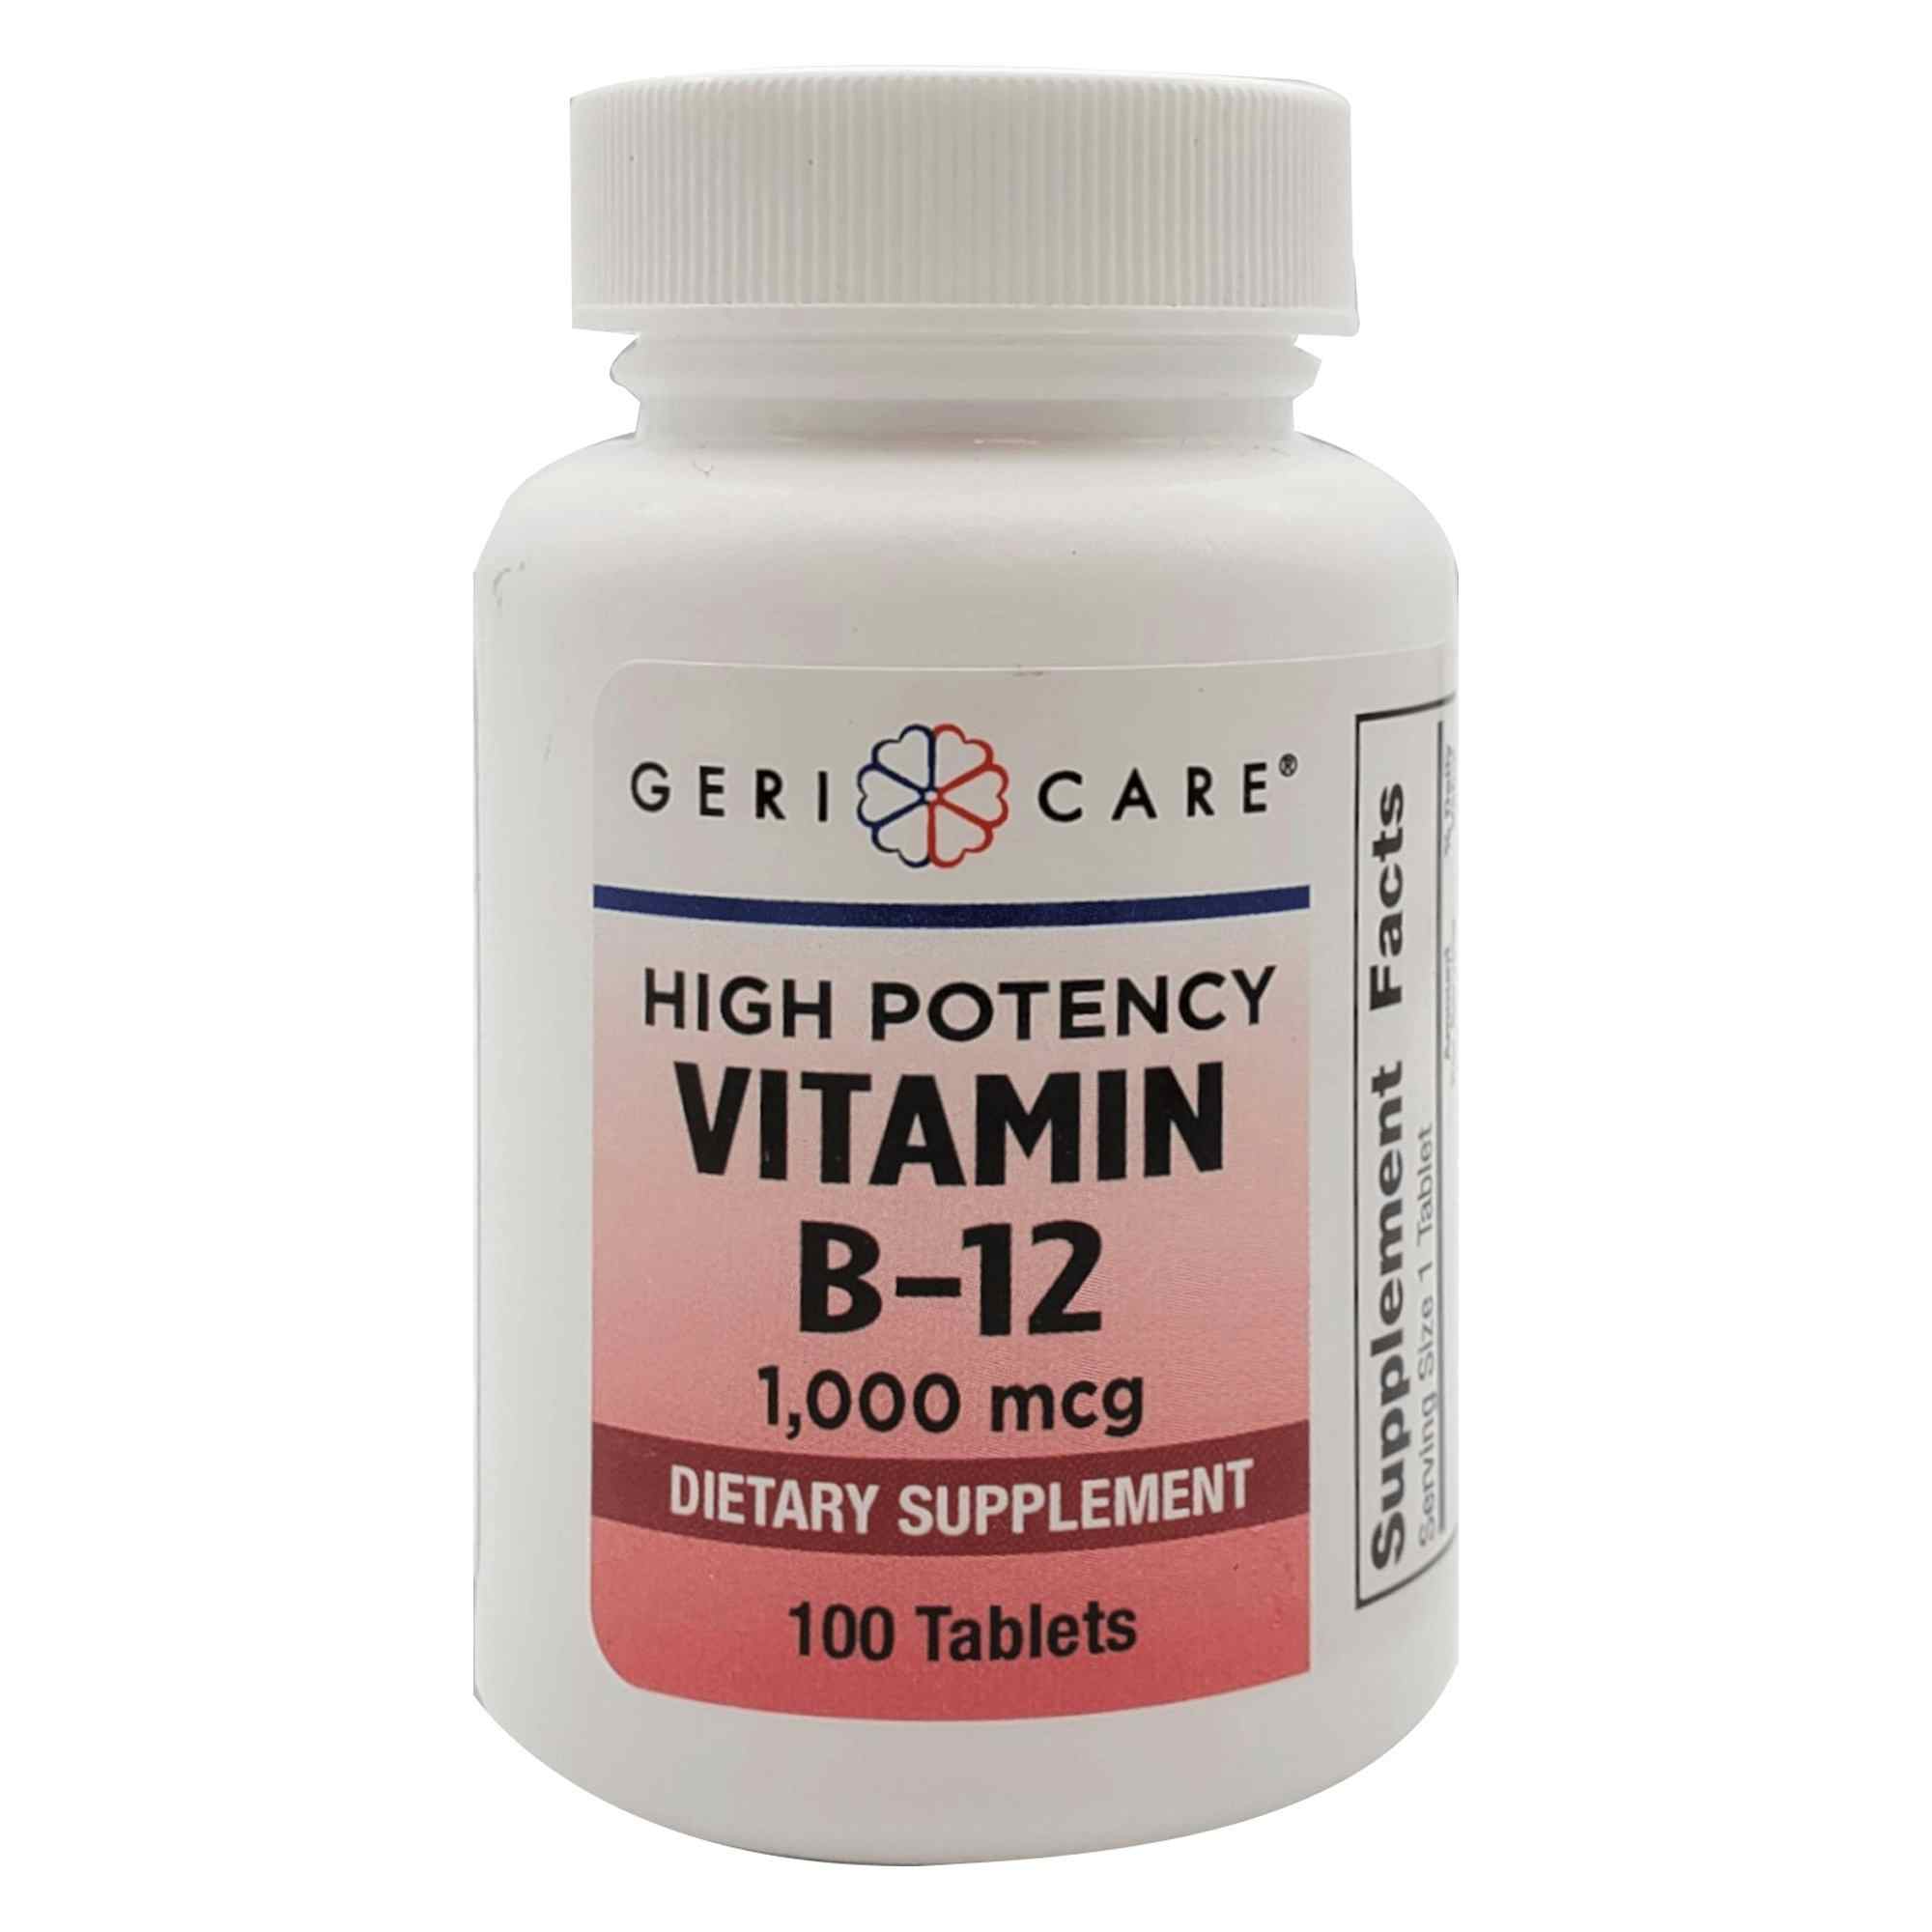 Geri Care High Potency Vitamin B-12 Dietary Supplement, 1,000 mcg, 100 Tablets